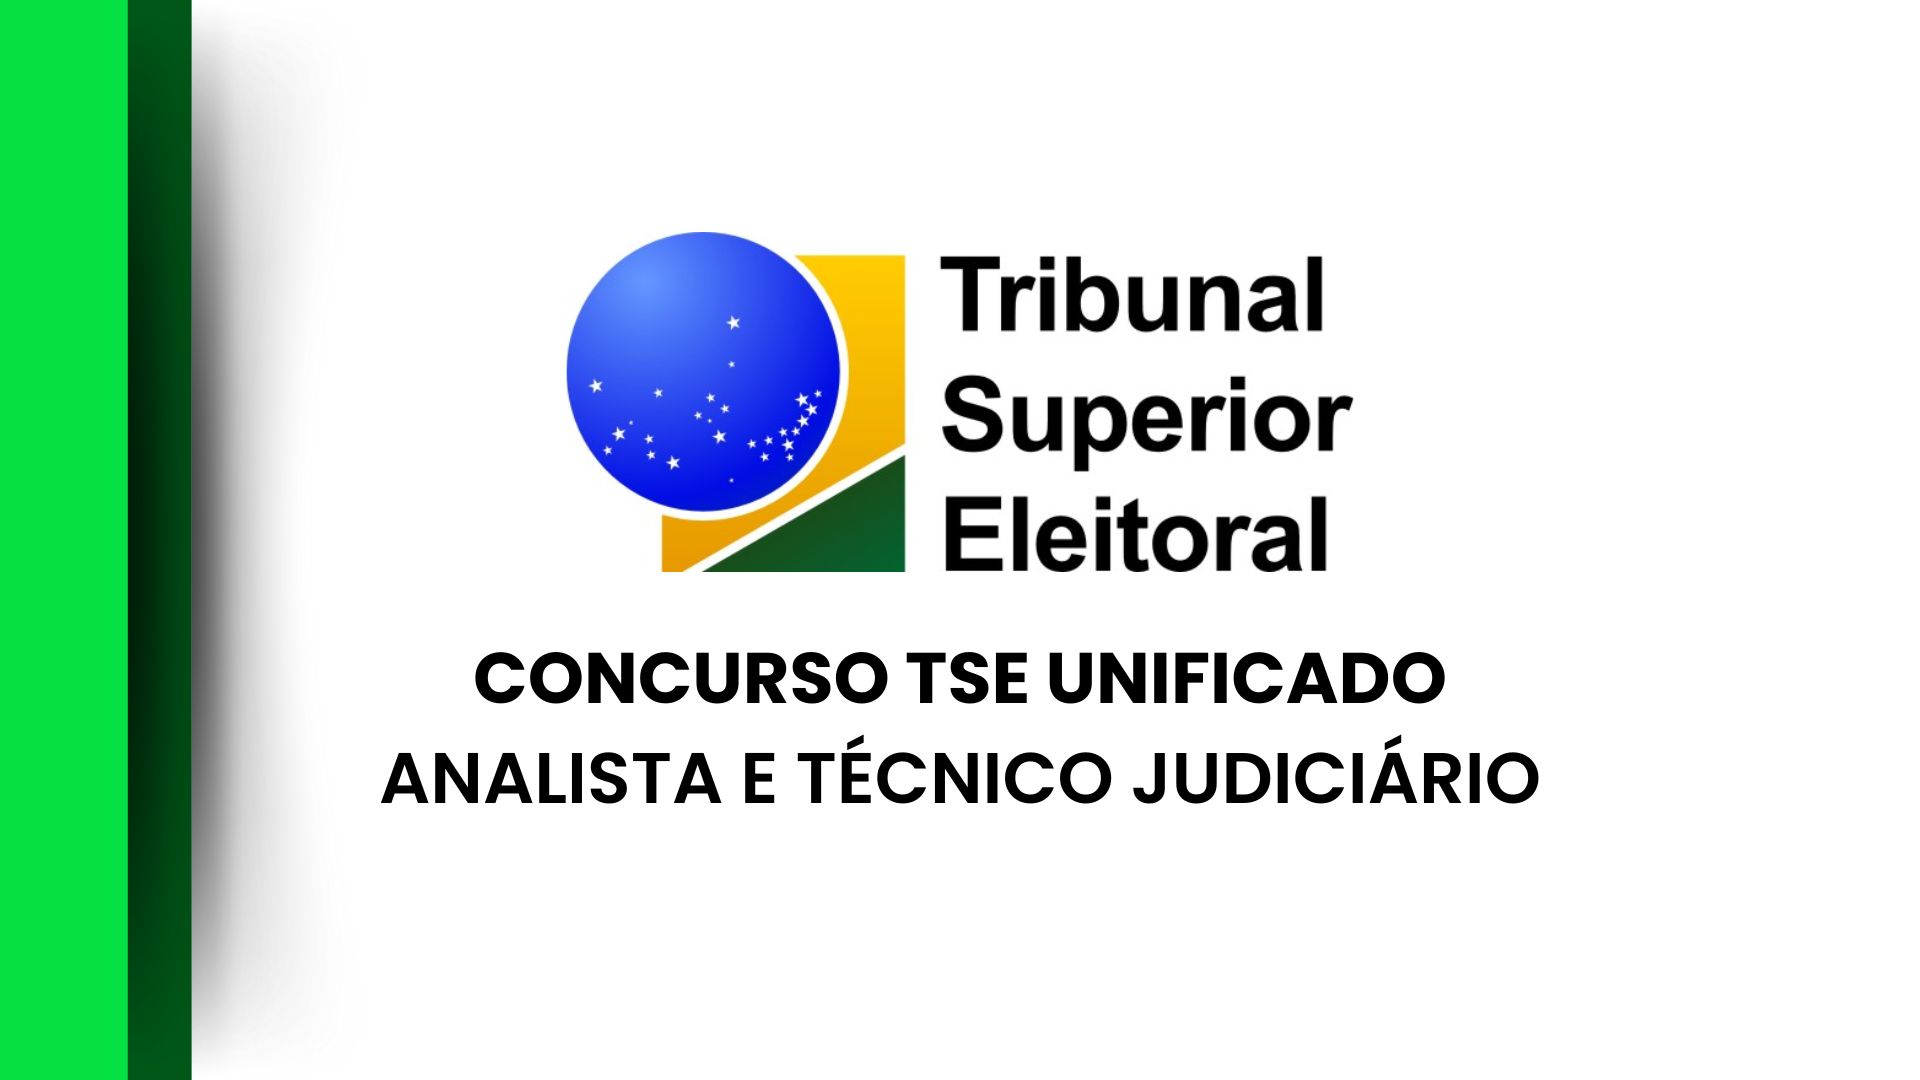 Concurso TSE Unificado: Edital Publicado!